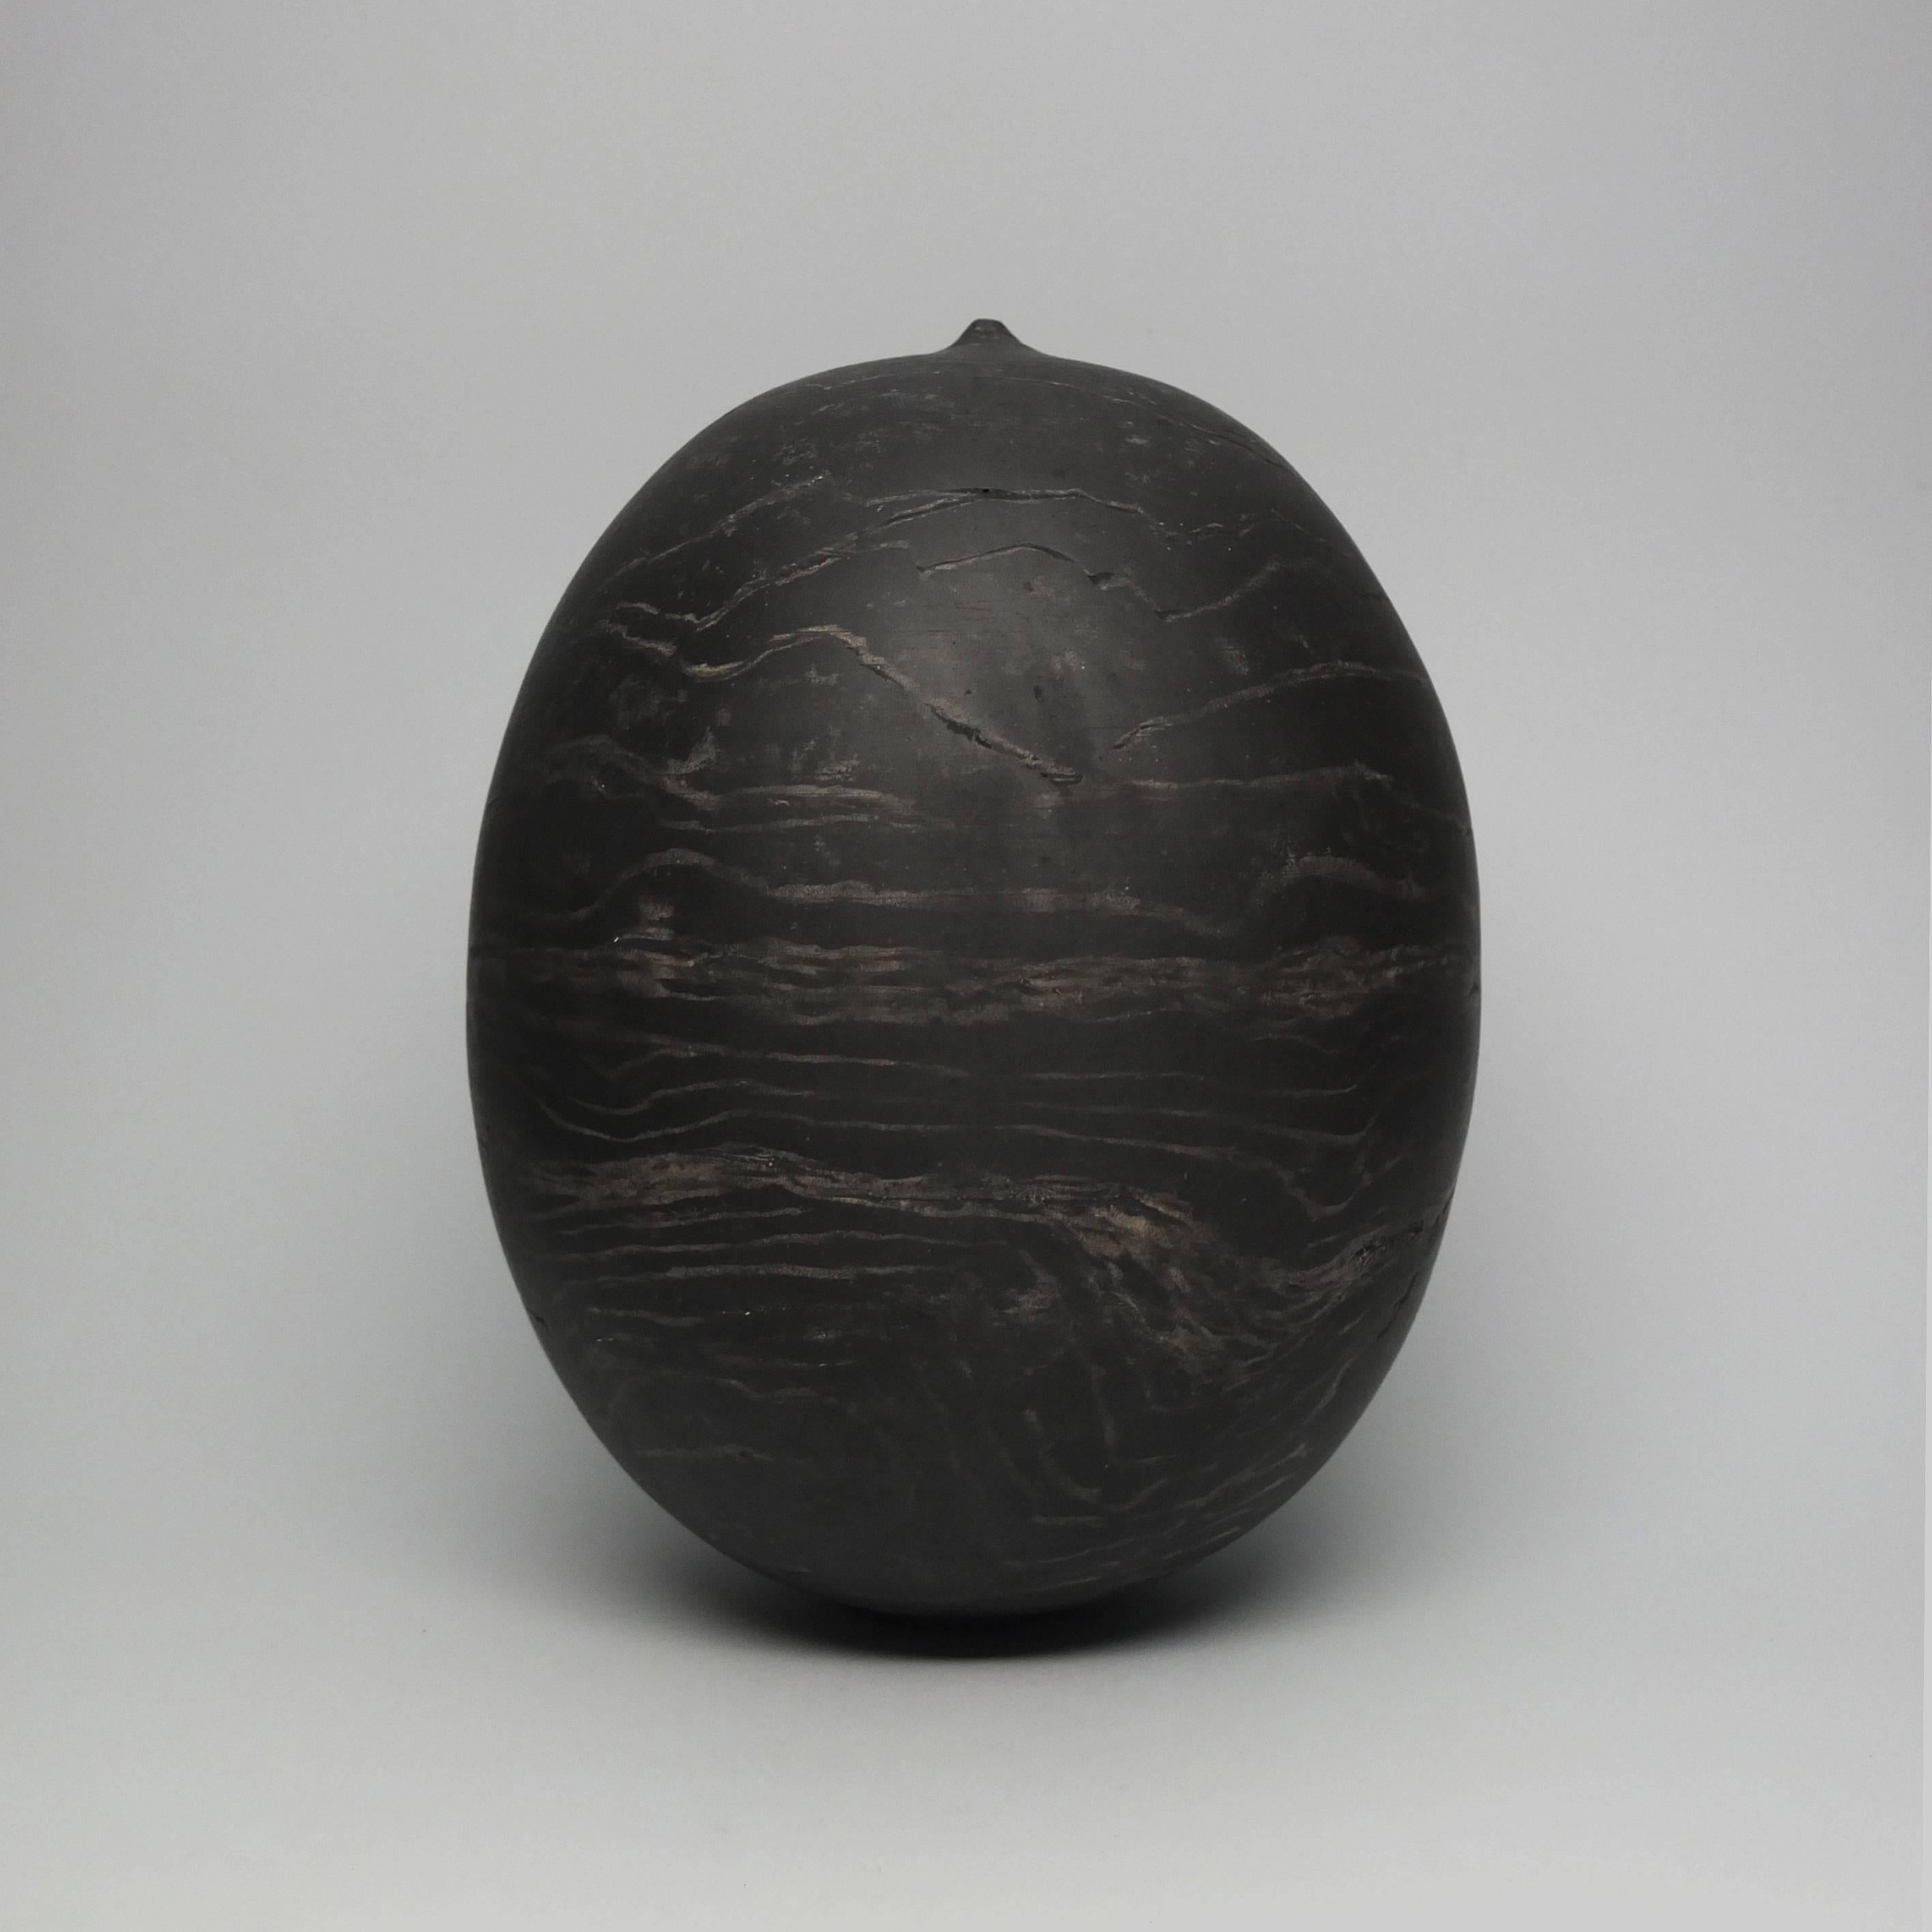 Organic Modern Handsome Vessel or Vase  Handmade by NYC Ceramist Jeffrey Loura 2018